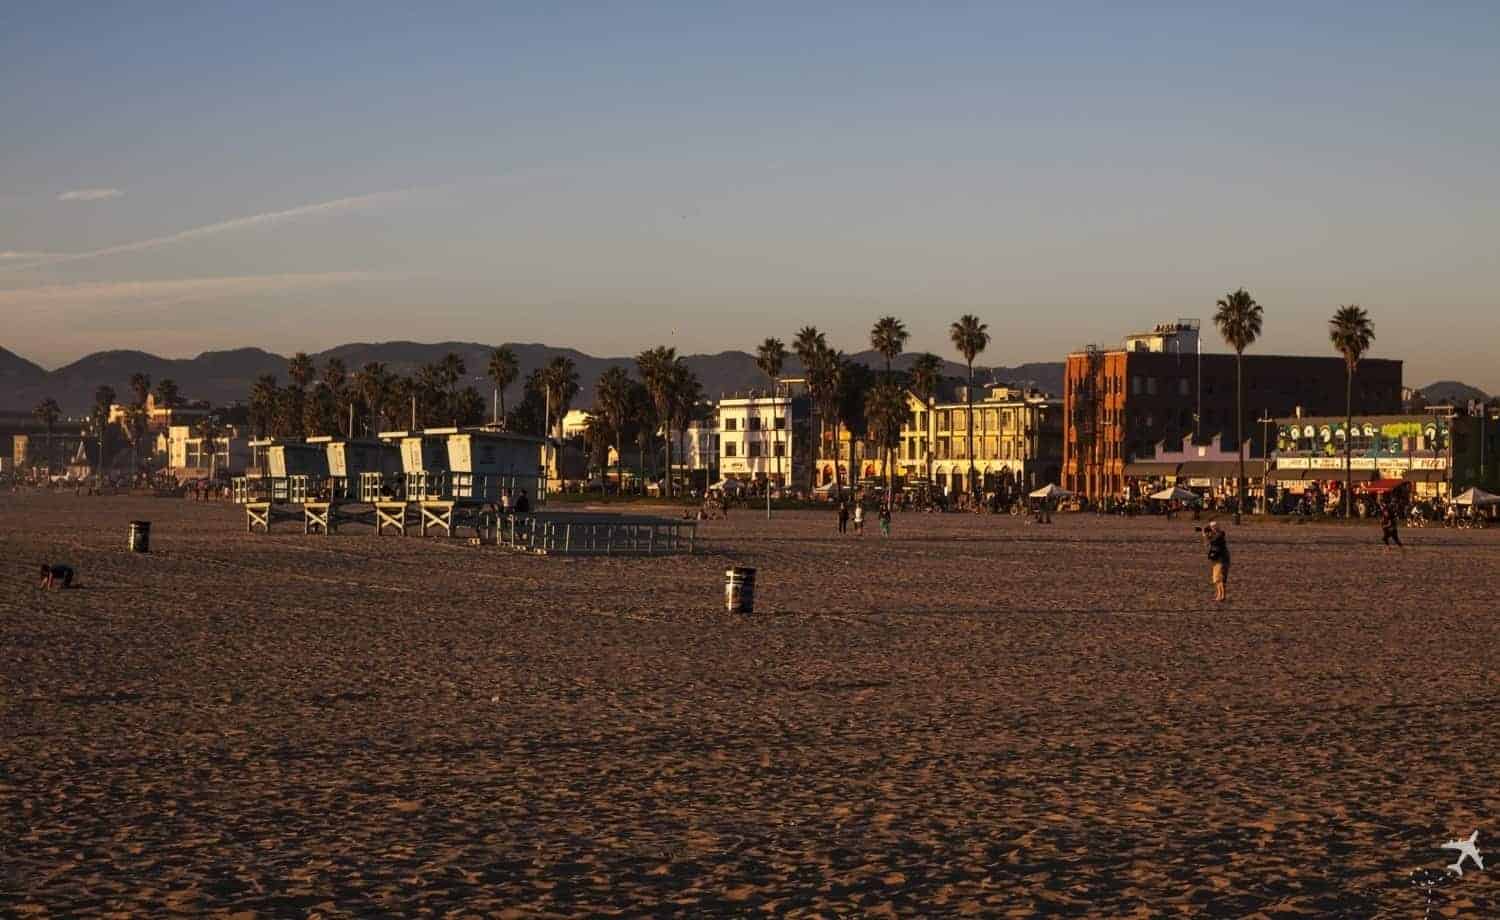 Venice Beach Los Angeles, USA